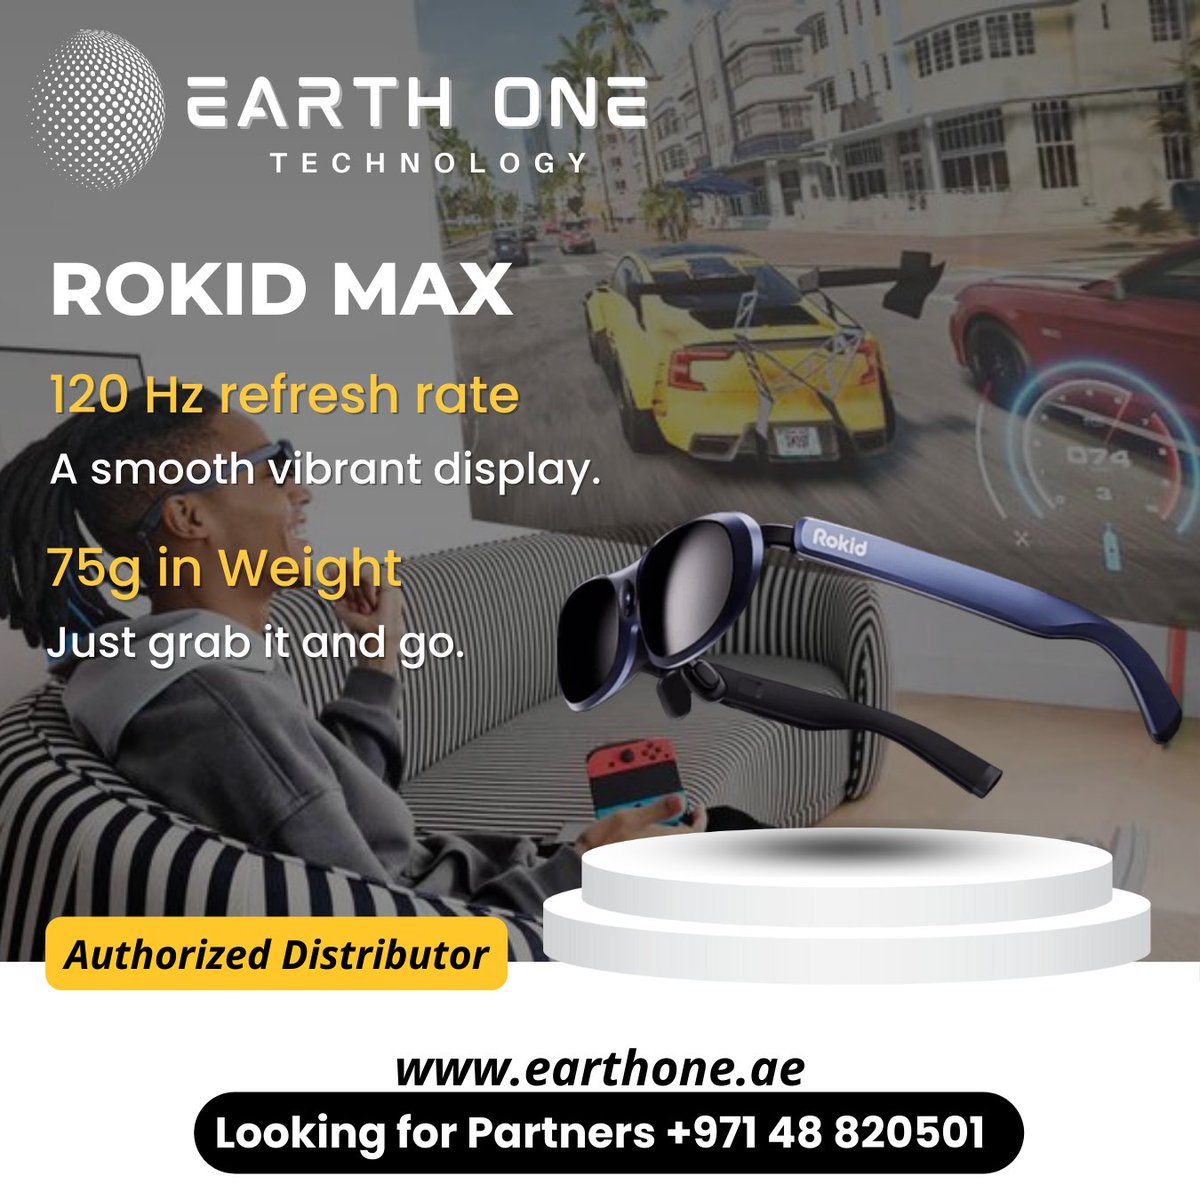 #earthone Rokid Max AR glasses

smpl.is/92gip

#earthonedubai #smarttech #dubaitech #earthonetec #earthonetech #gcc #arglasses #rokidmax #rokidmaxglasses #rokidglasses